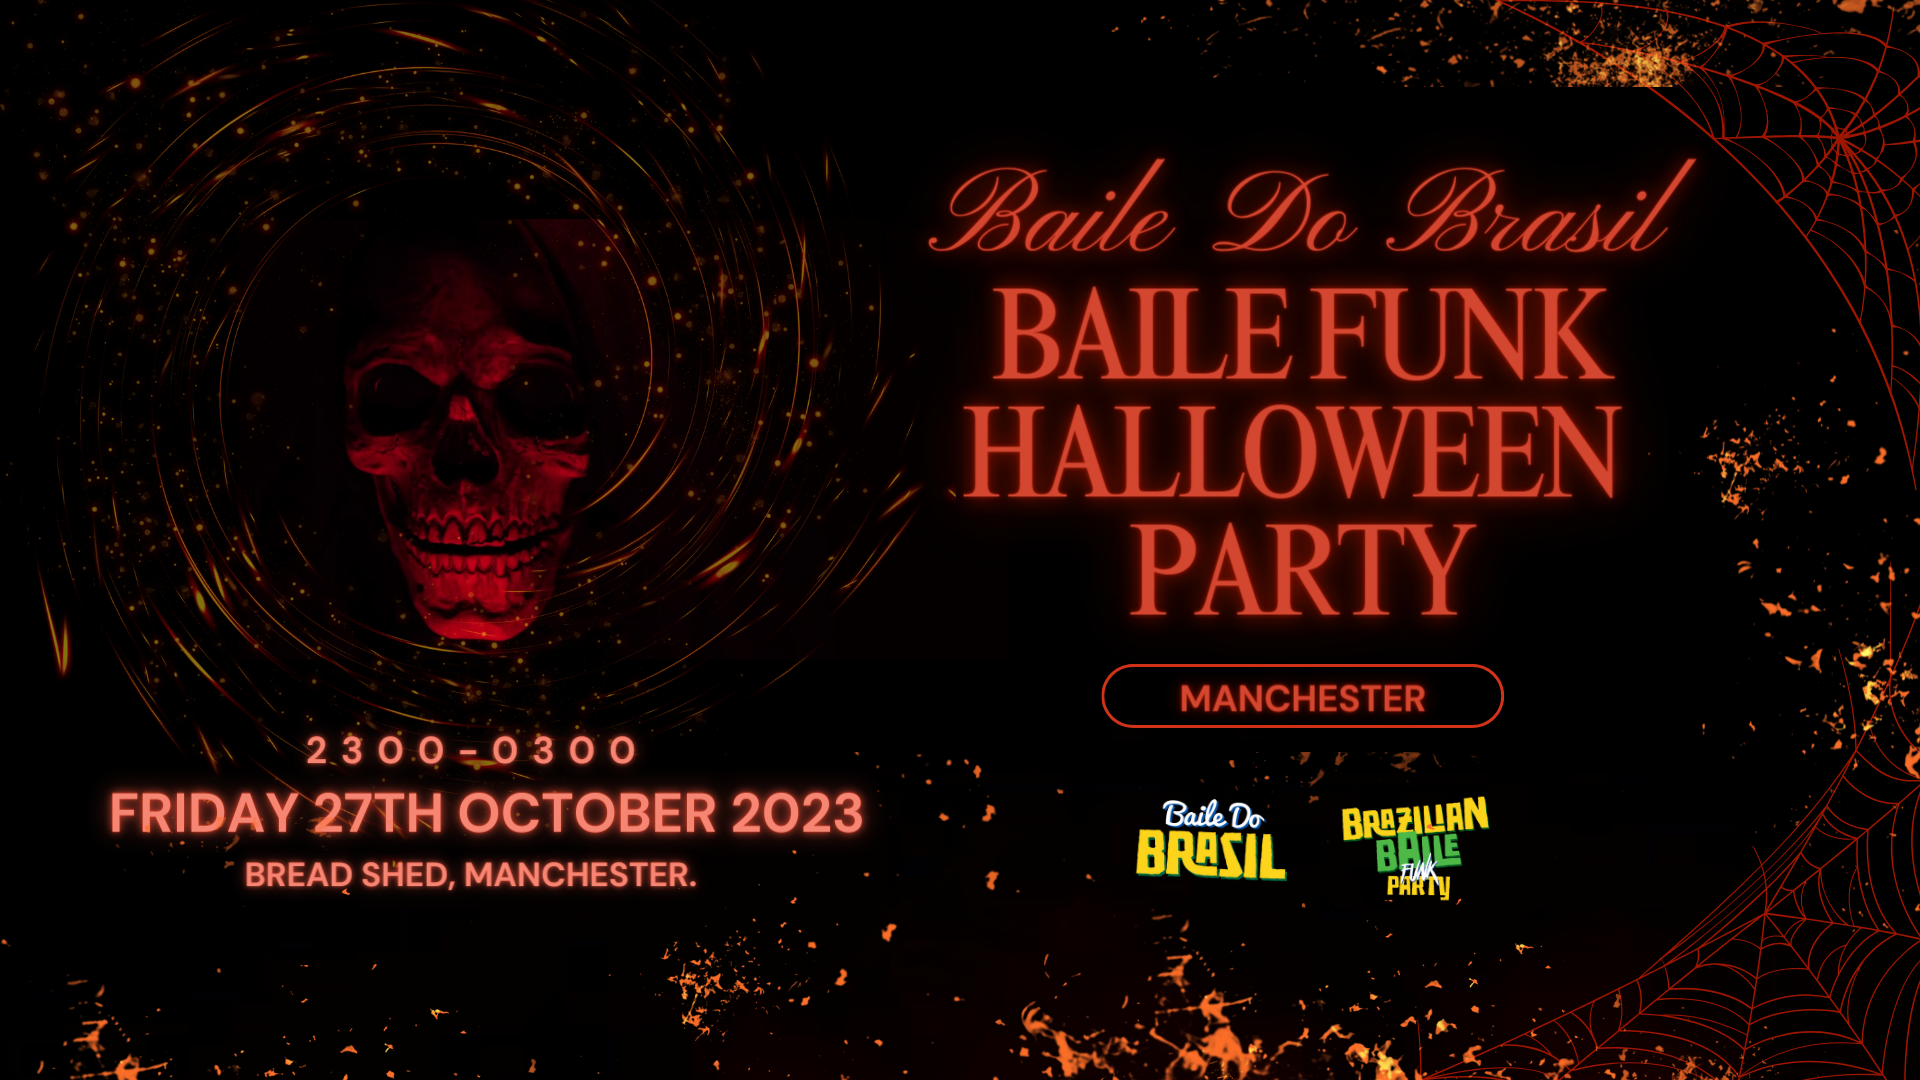 Baile Do Brasil: Baile Funk Halloween Party (Manchester) 2023